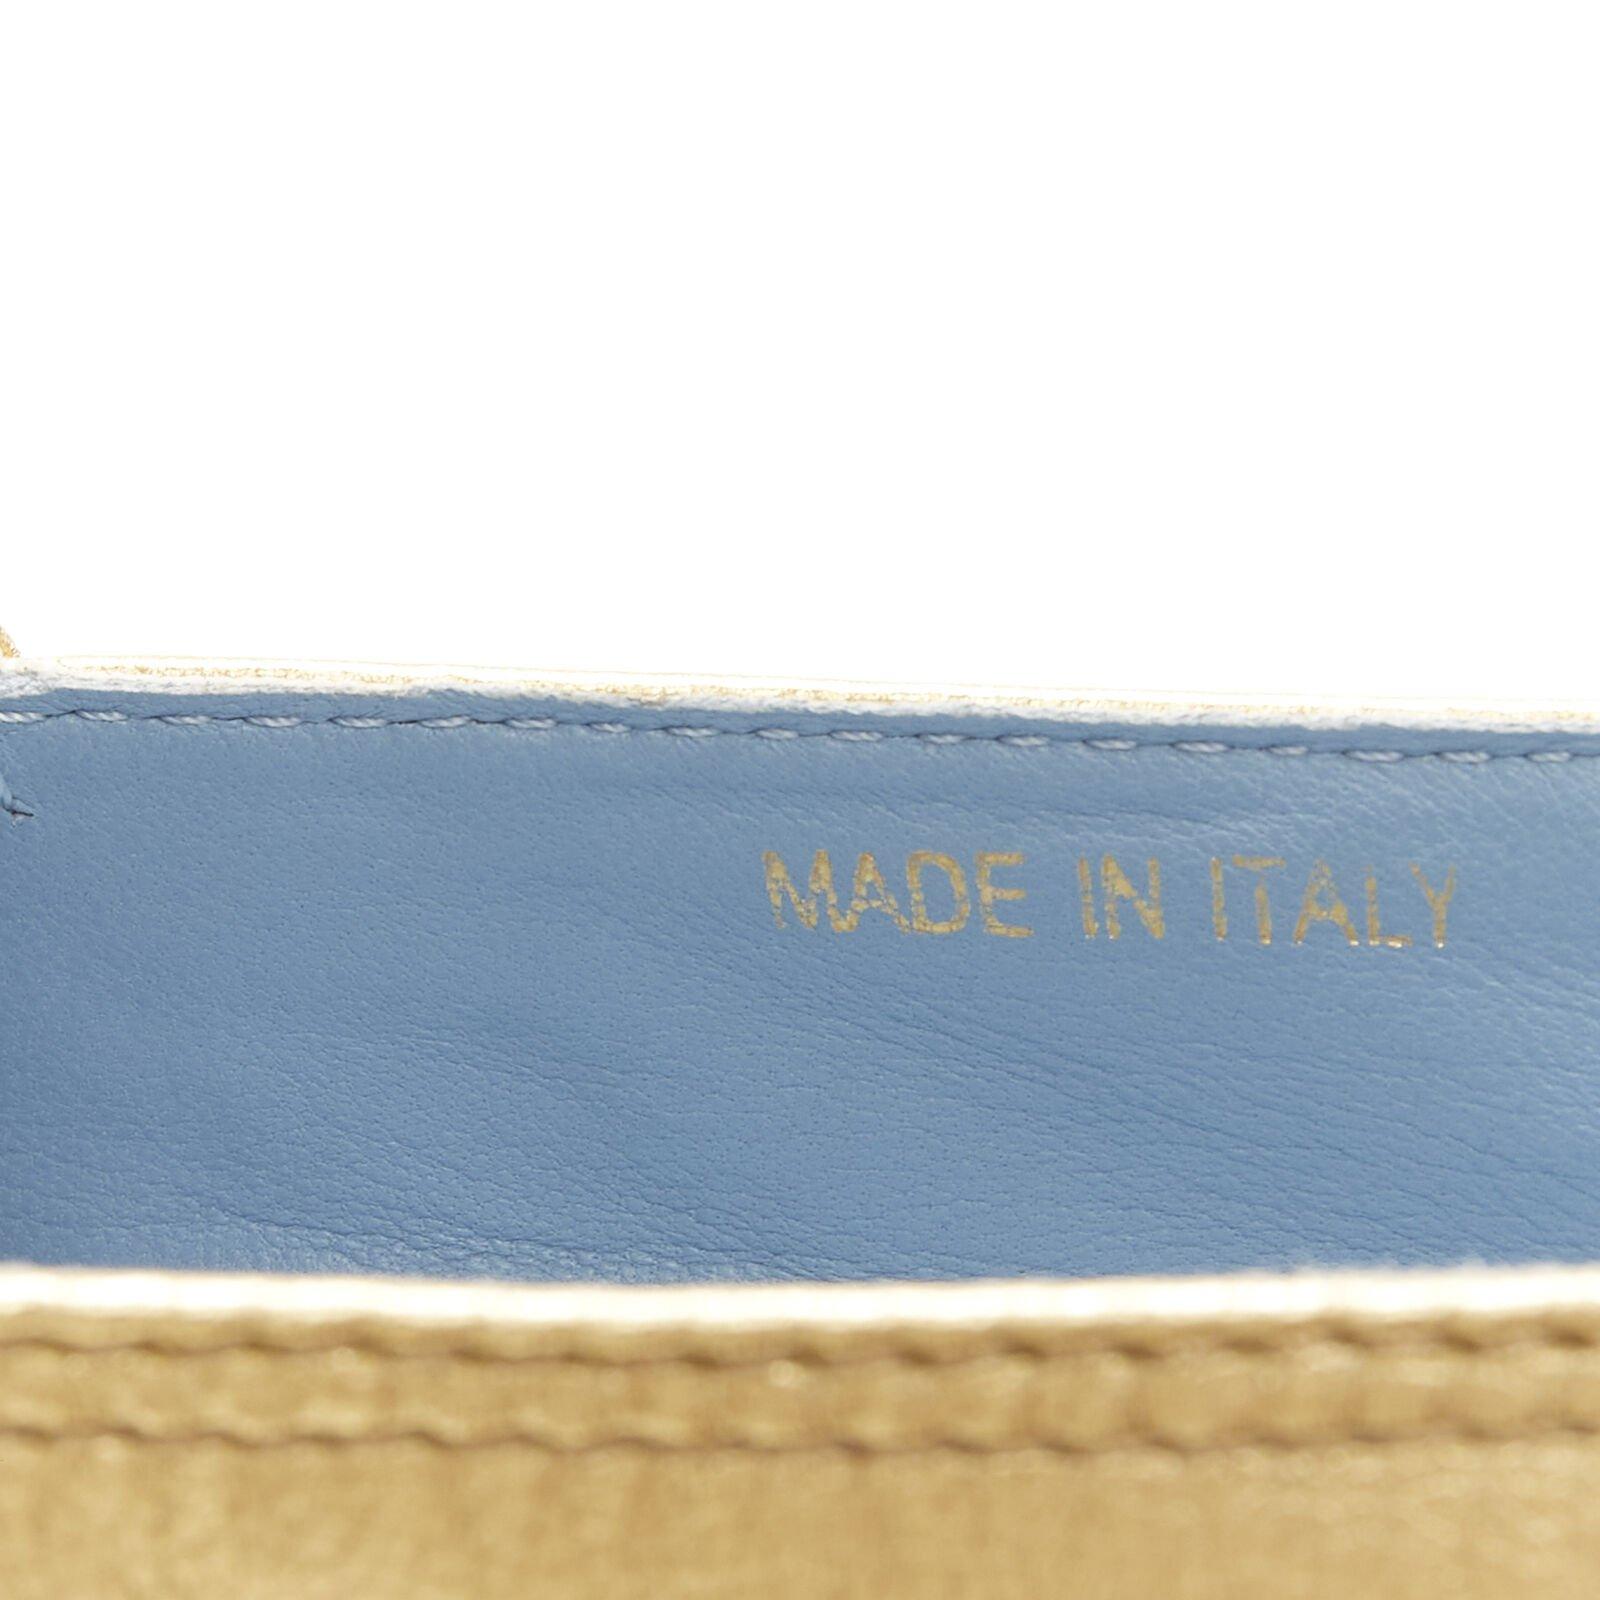 new PRADA metallic gold leather logo peep toe jute platform espadrille shoe EU38 7